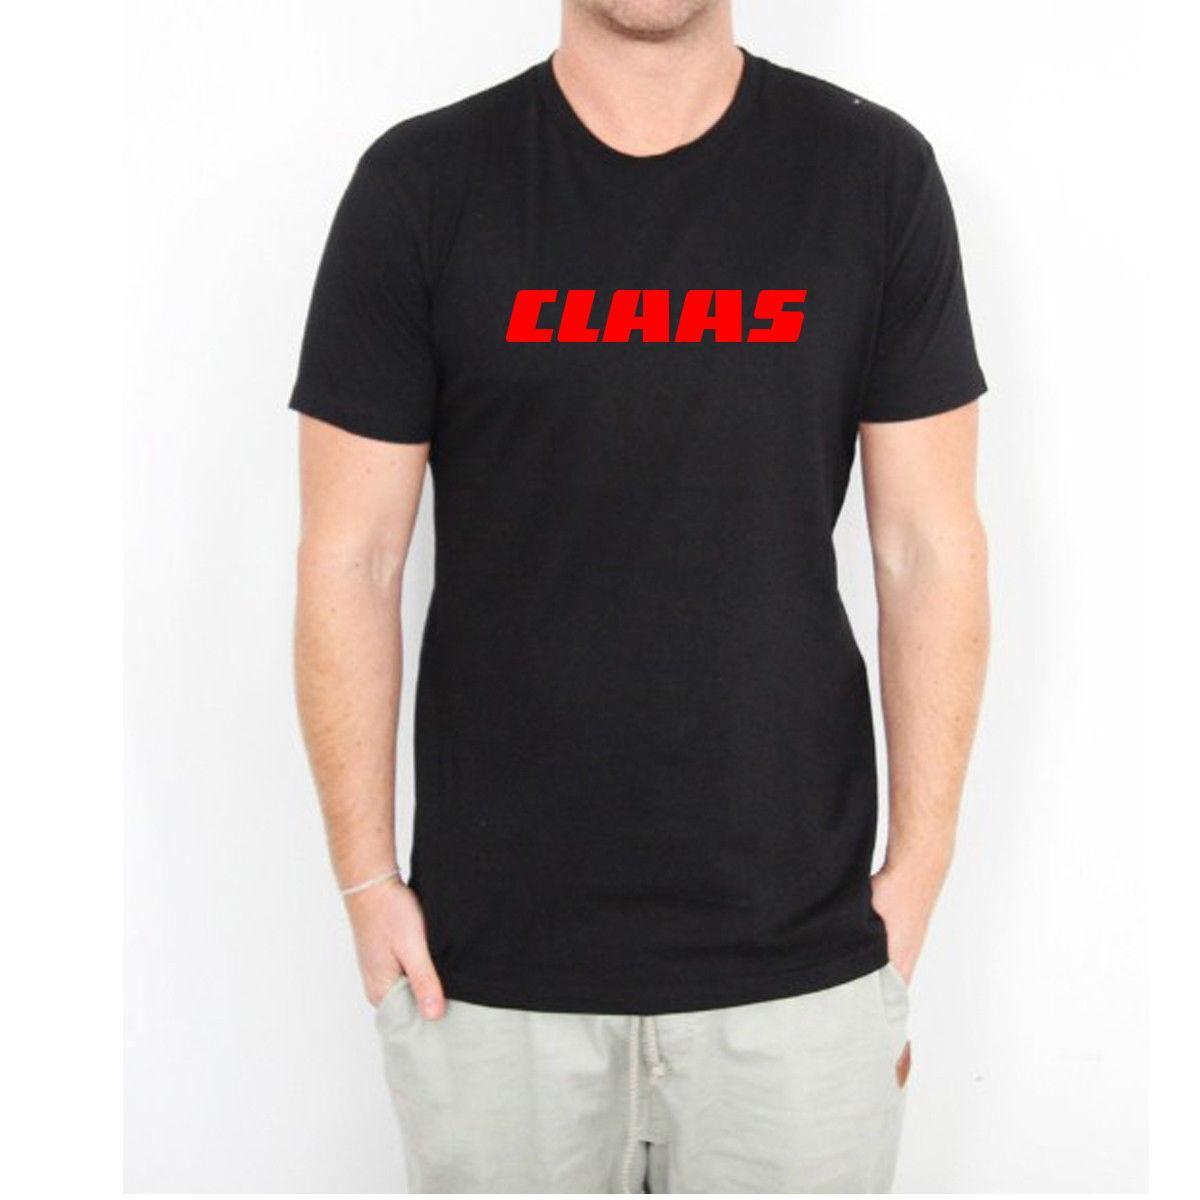 Claas Logo - CLAAS LOGO BRAND MACHINE Men Black T Shirt 100% Cotton Personalized